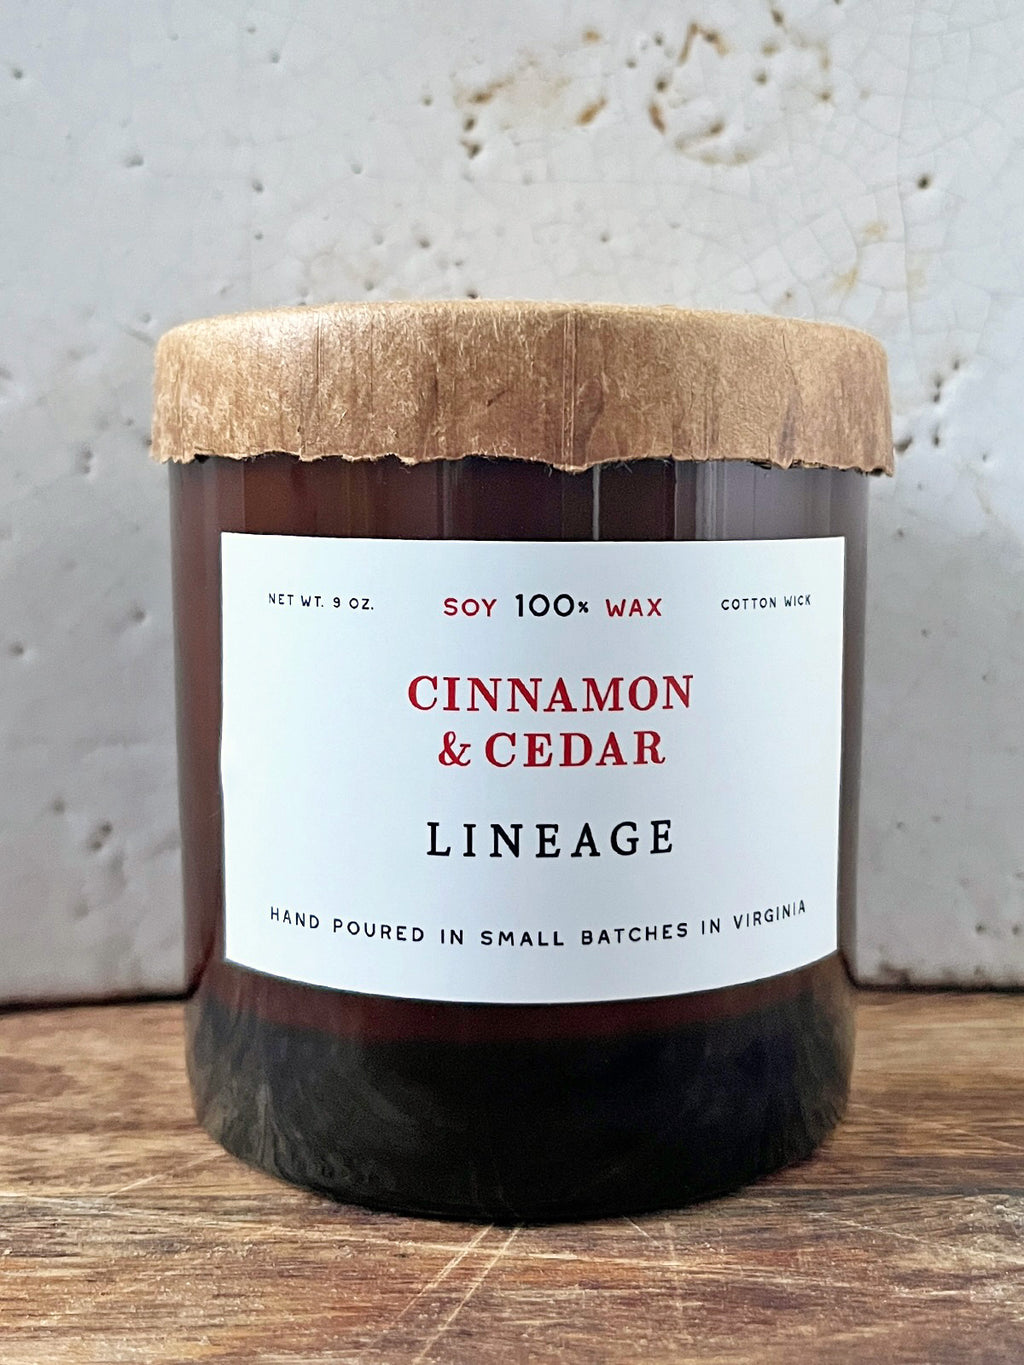 LINEAGE - Cinnamon and Cedar Candle